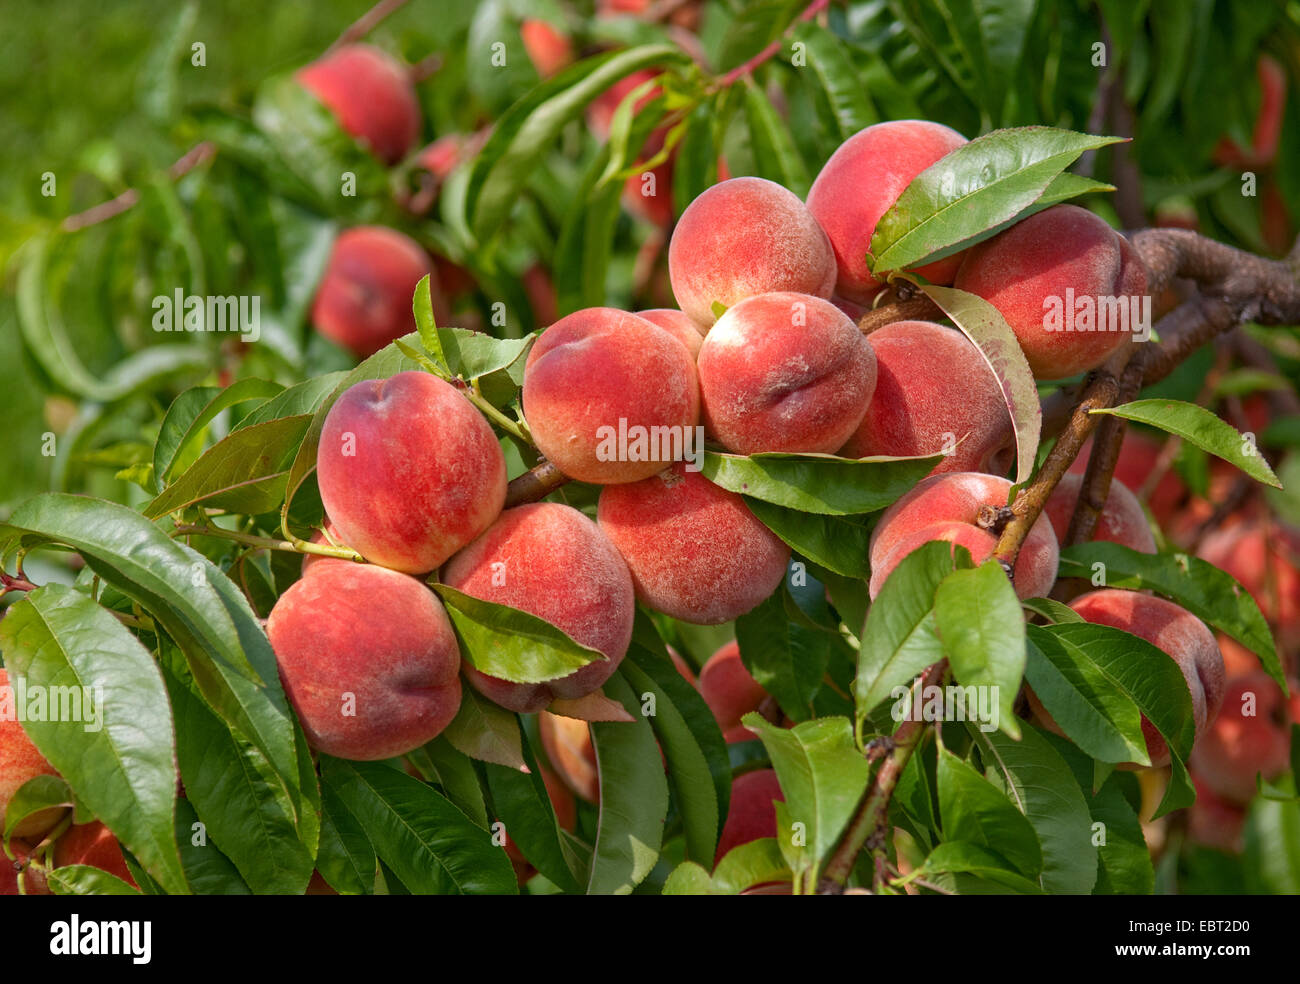 peach (Prunus persica 'South Haven', Prunus persica South Haven), cultivar South Haven, peaches on a tree Stock Photo